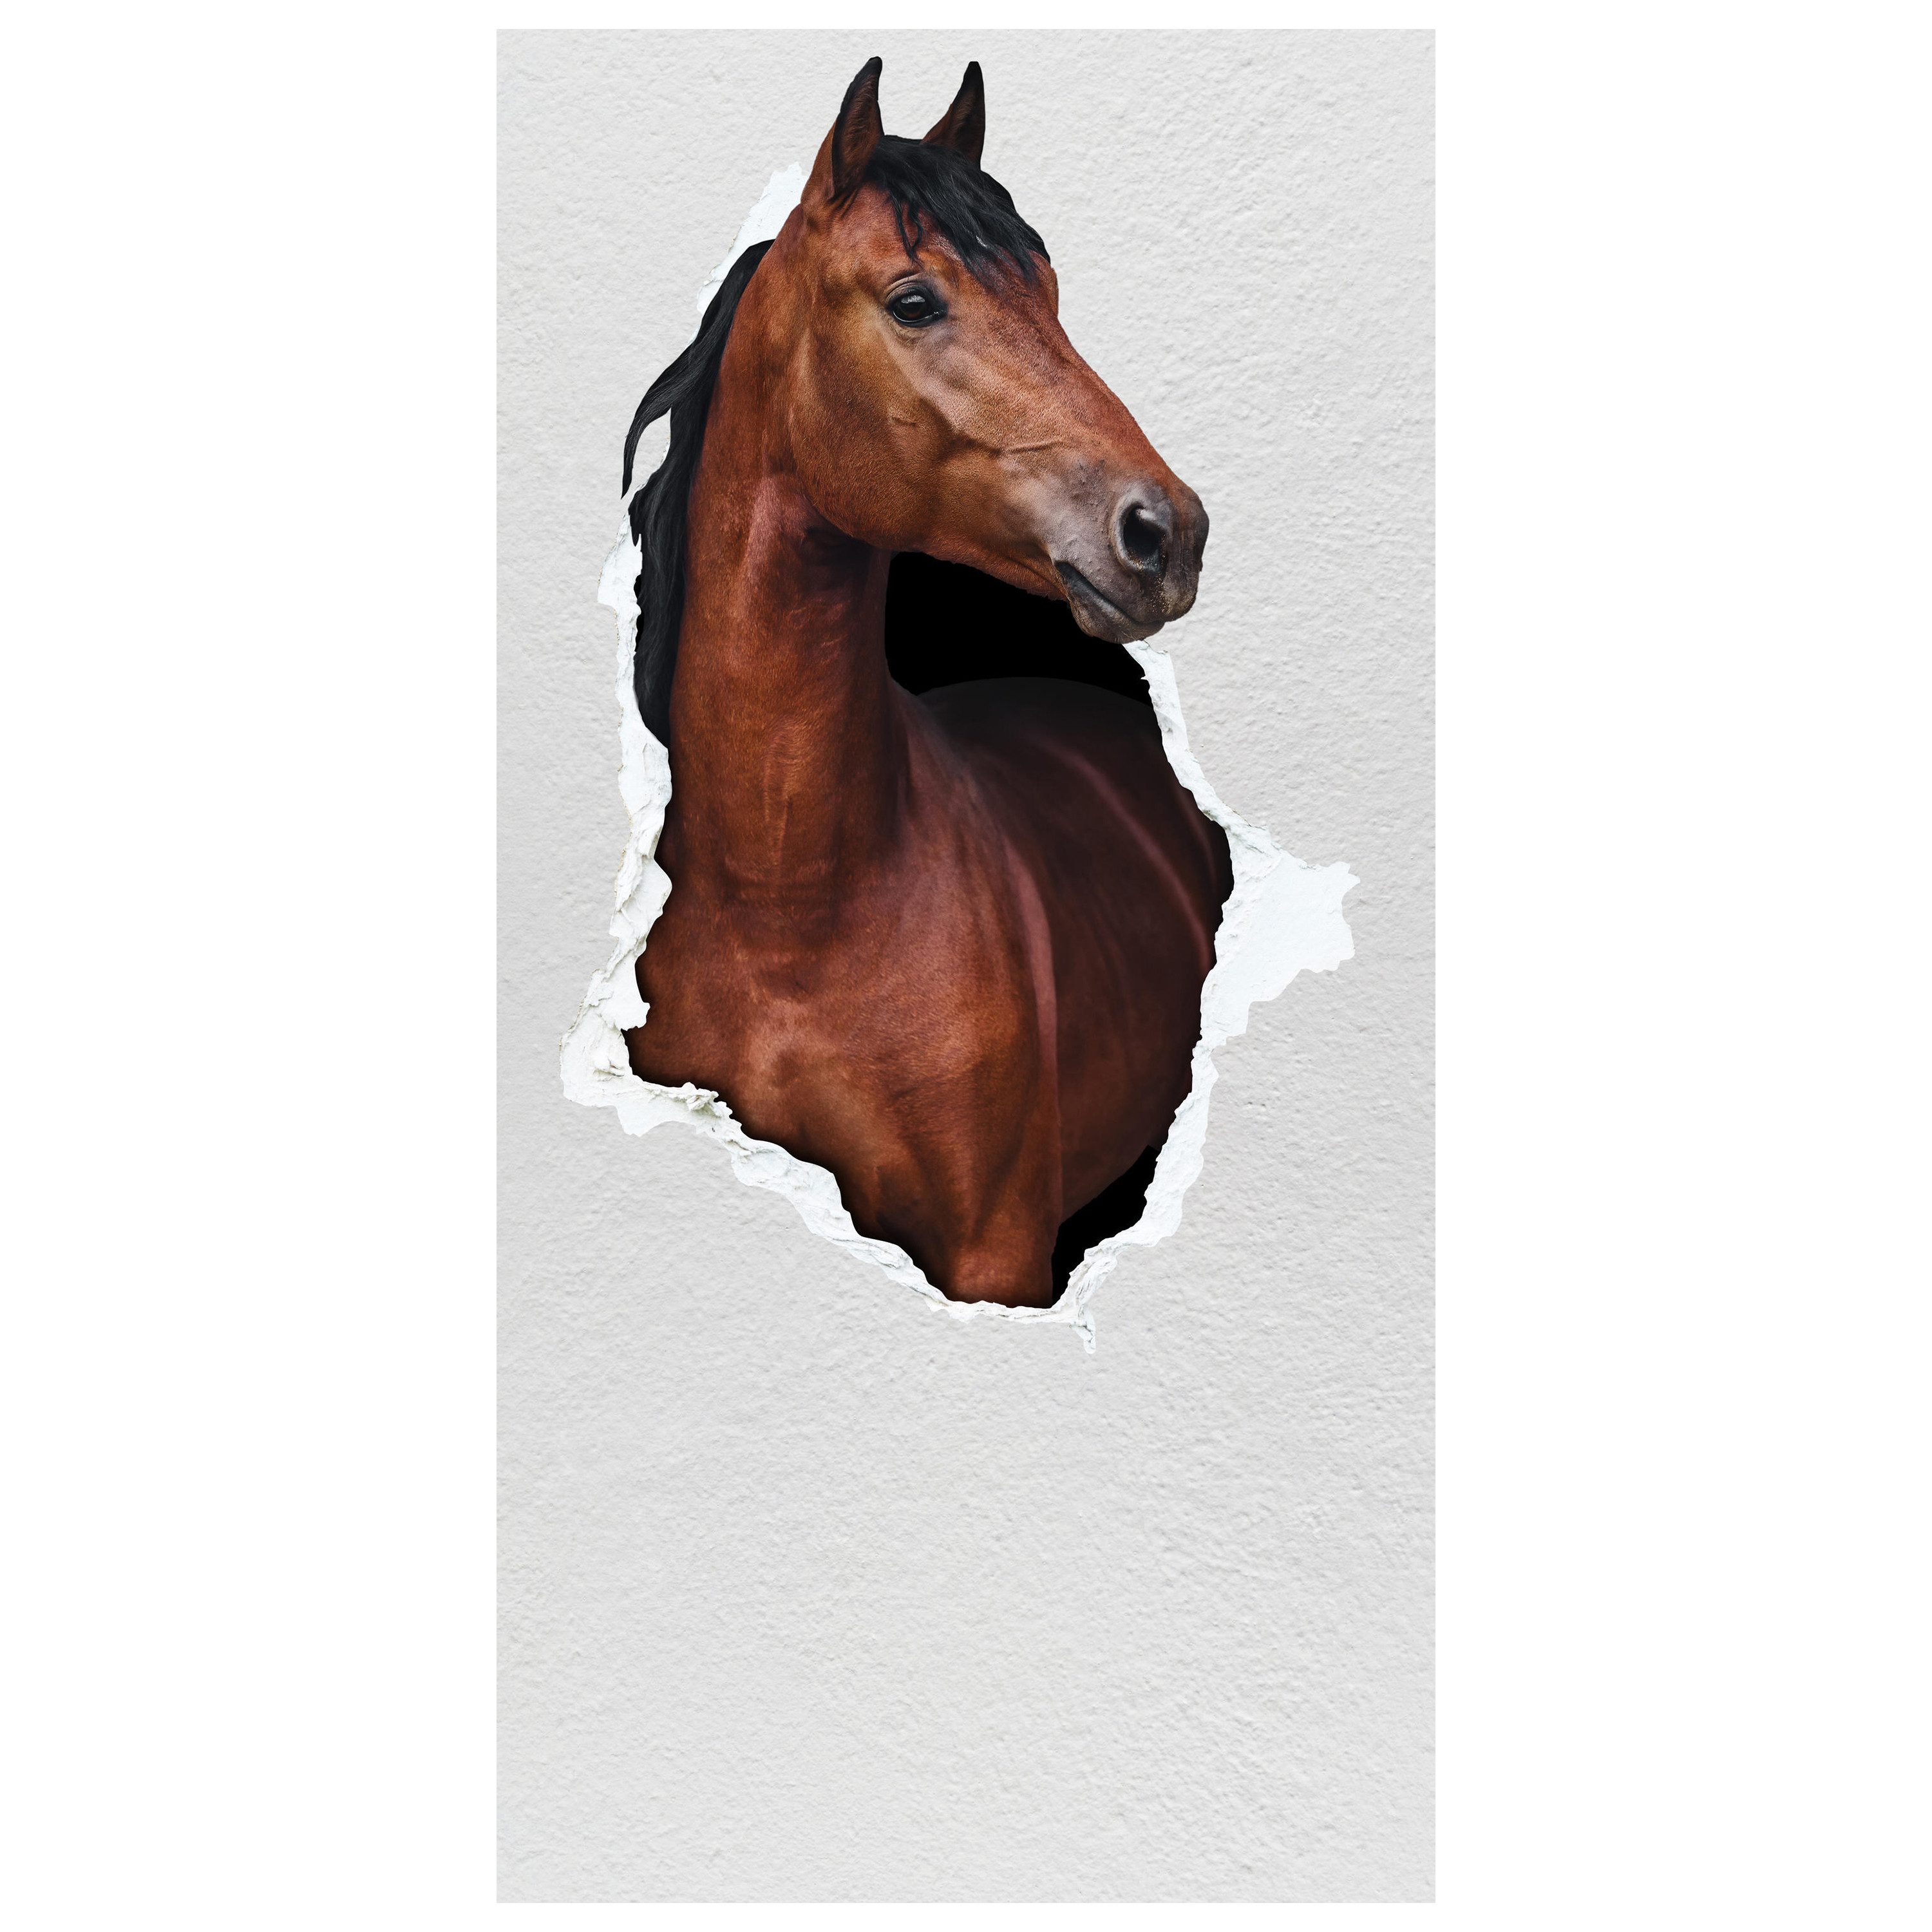 wandmotiv24 Türtapete braunes Pferd schaut durch Mauer, 3D, glatt, Fototapete, Wandtapete, Motivtapete, matt, selbstklebende Dekorfolie